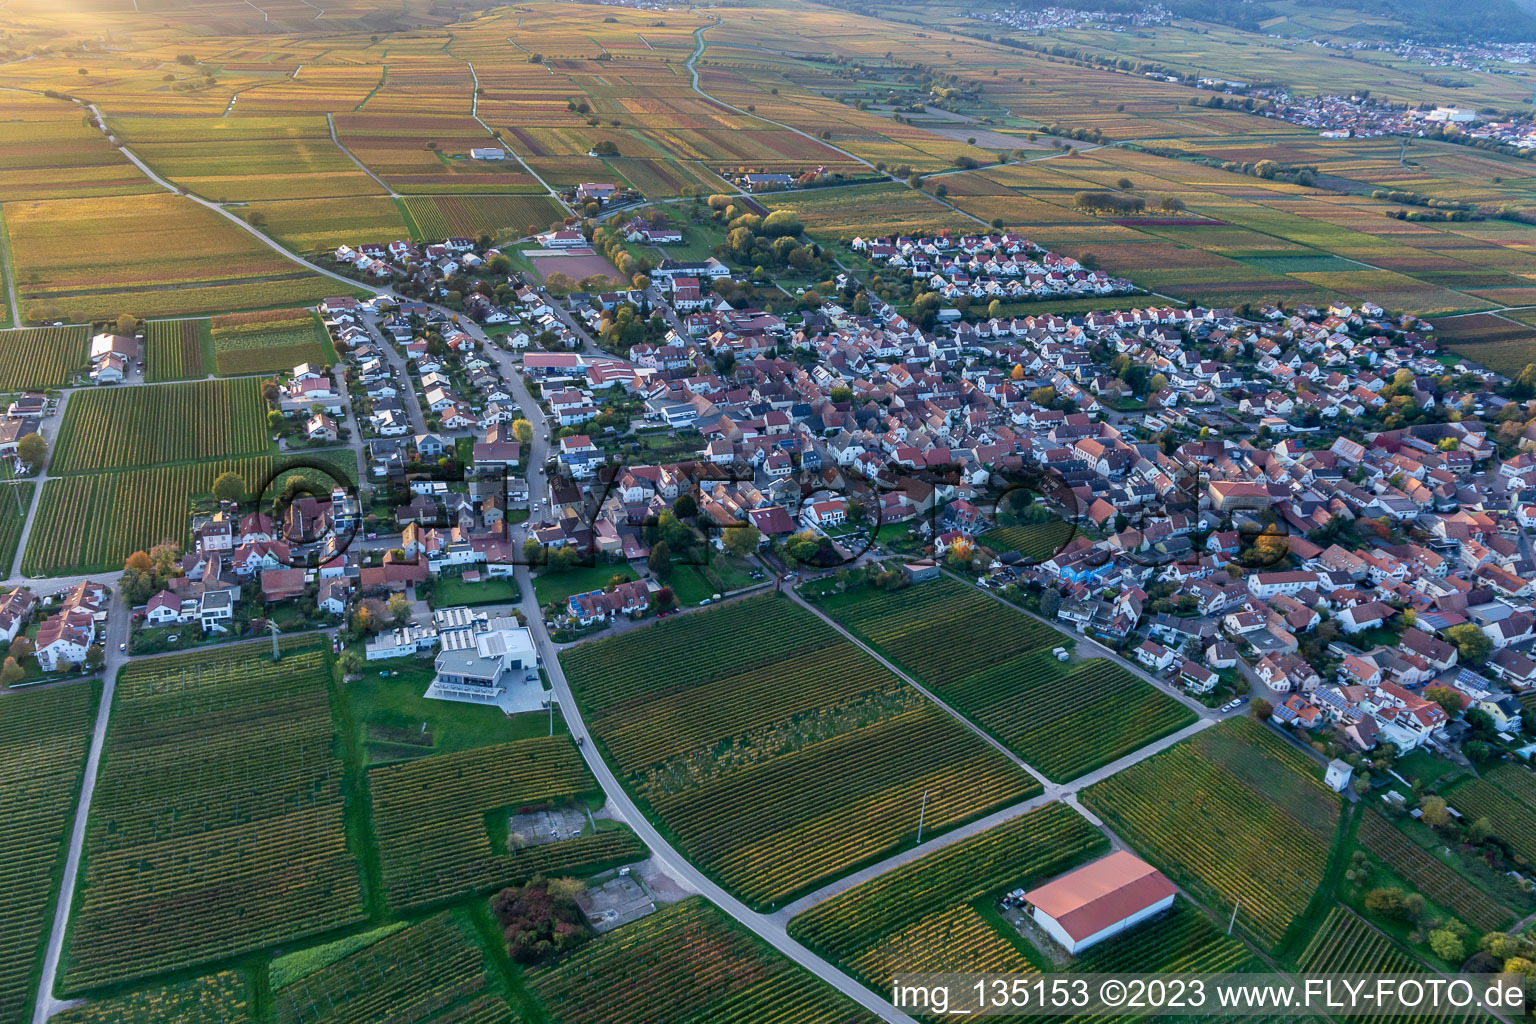 Drone image of District Nußdorf in Landau in der Pfalz in the state Rhineland-Palatinate, Germany